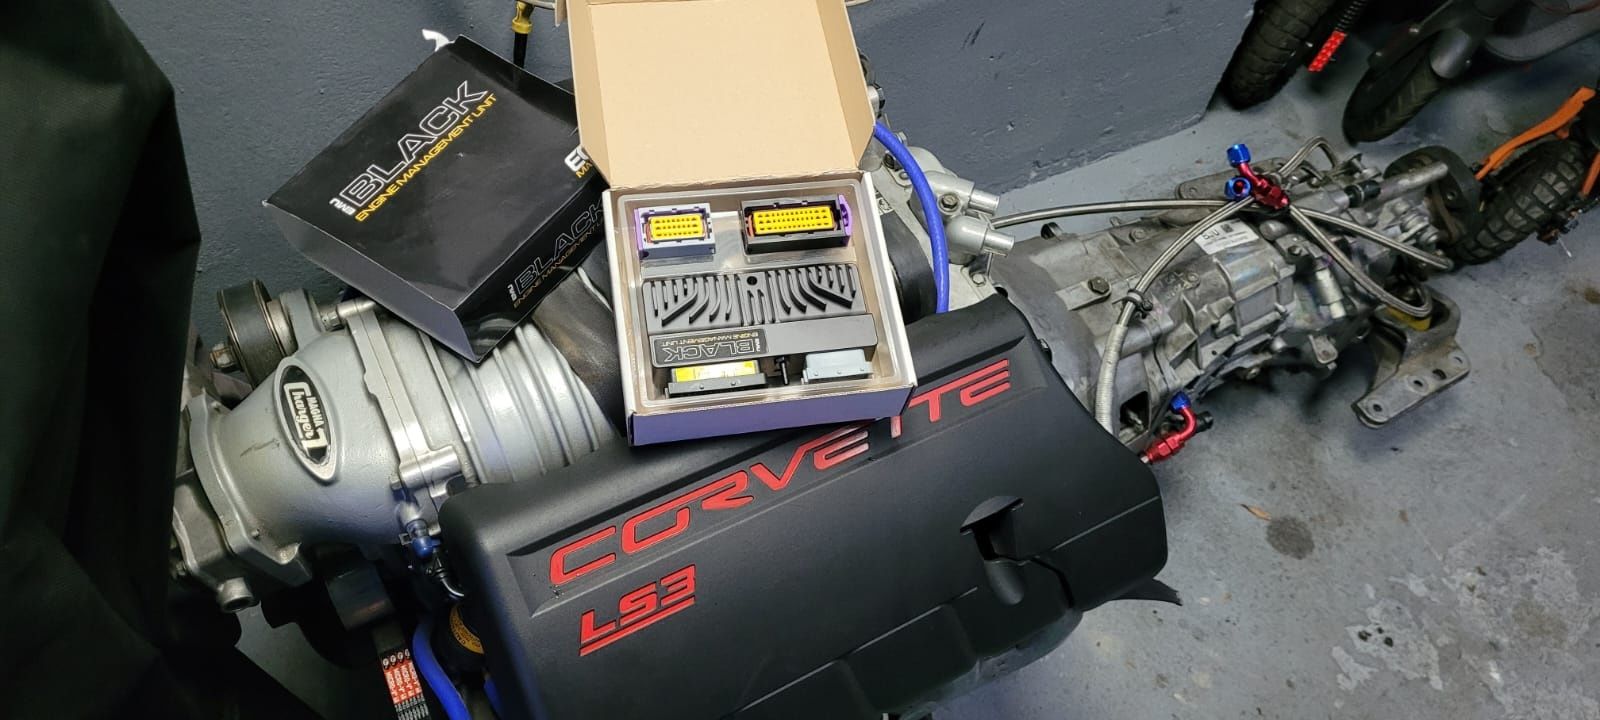 Silnik LS2 Corvette, skrzynia Tremec, kompresor Magnuson., Ecu Master